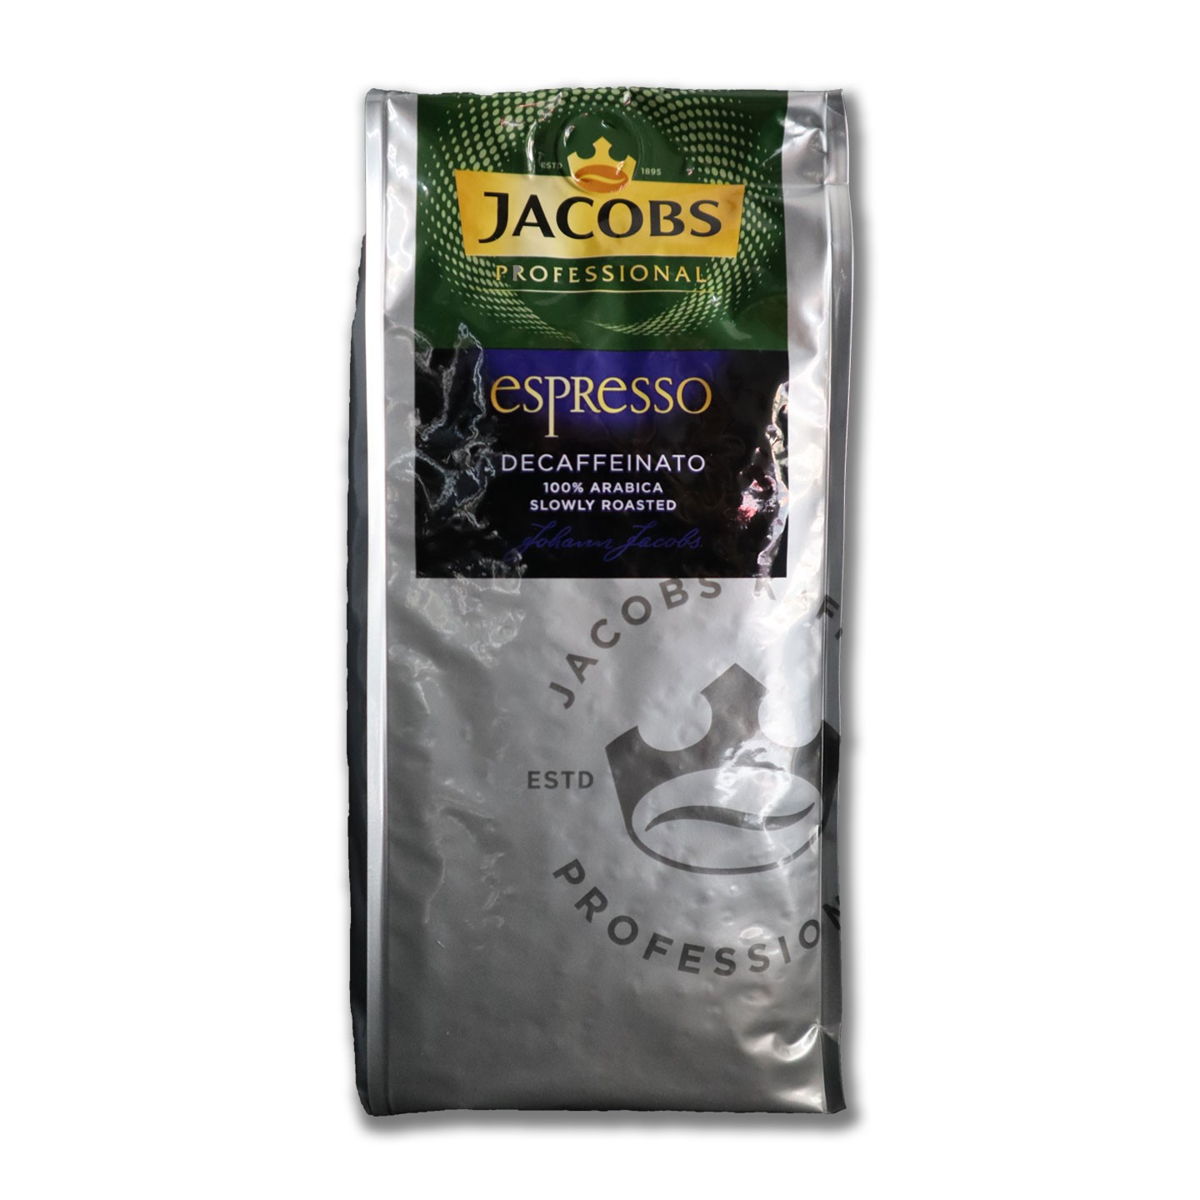 Jacobs Professional Espresso Decaffeinato